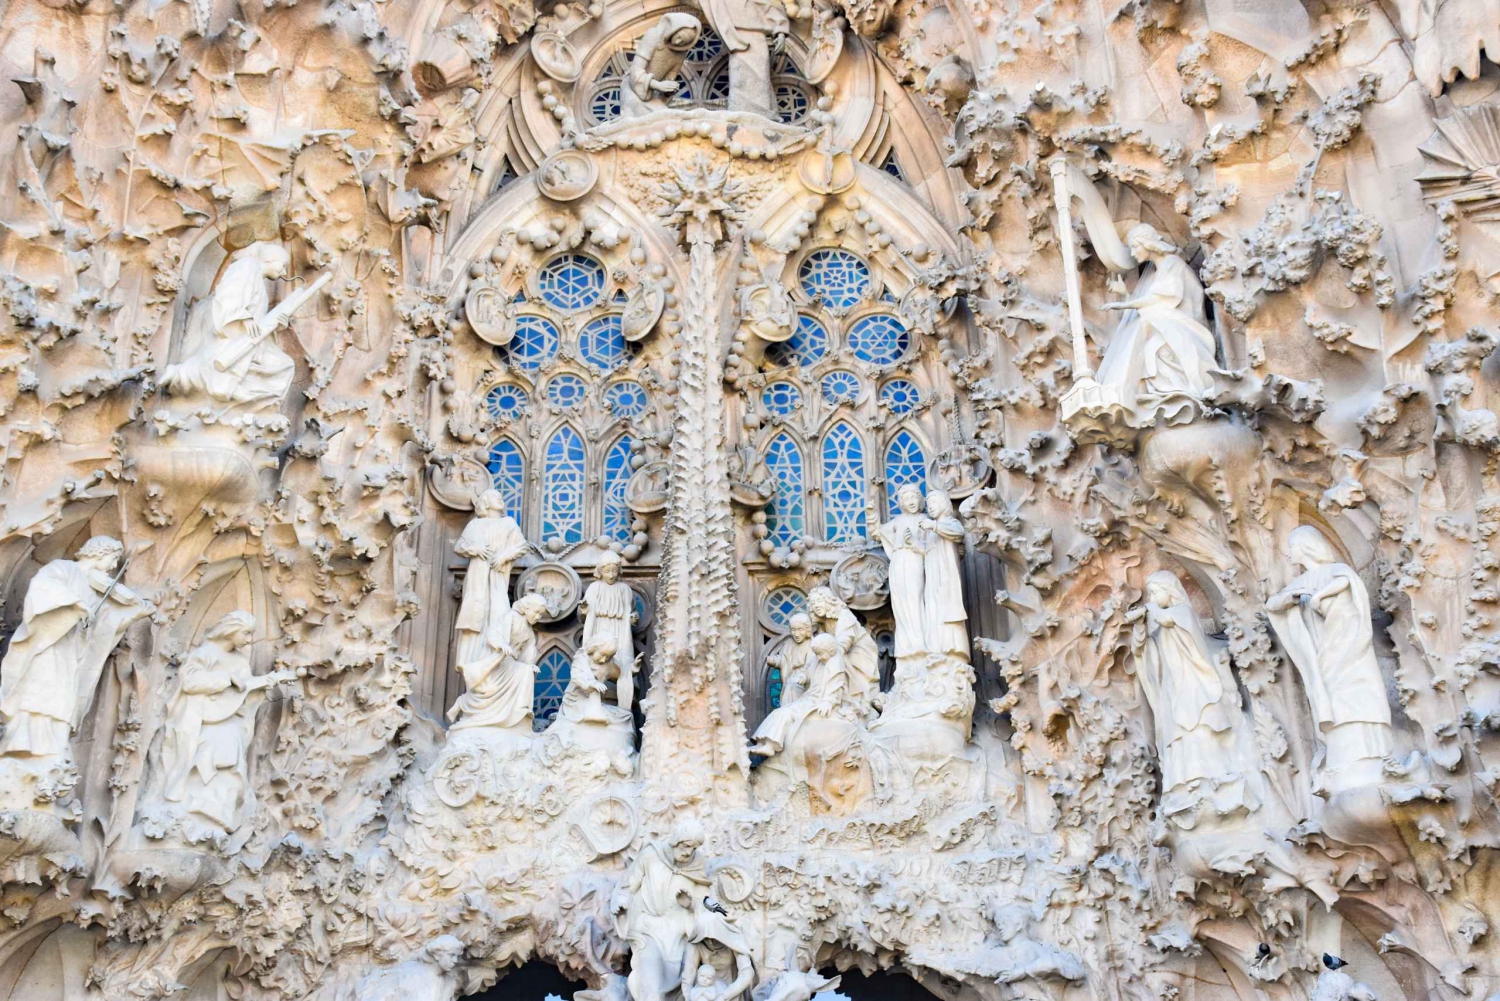 Skip-The-Line Sagrada Familia & Park Güell Guided Tour